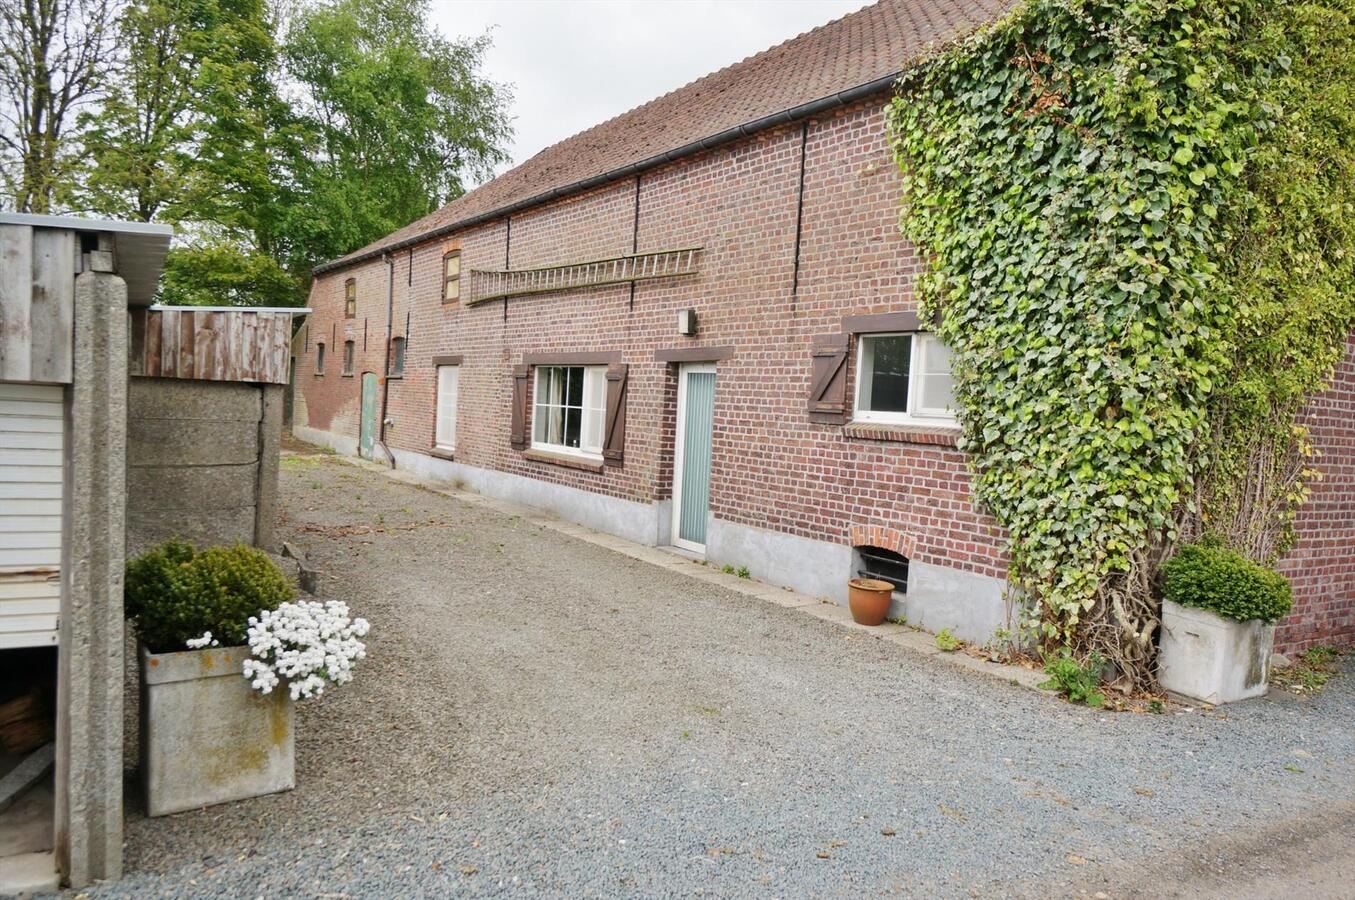 Property sold in Steenhuffel